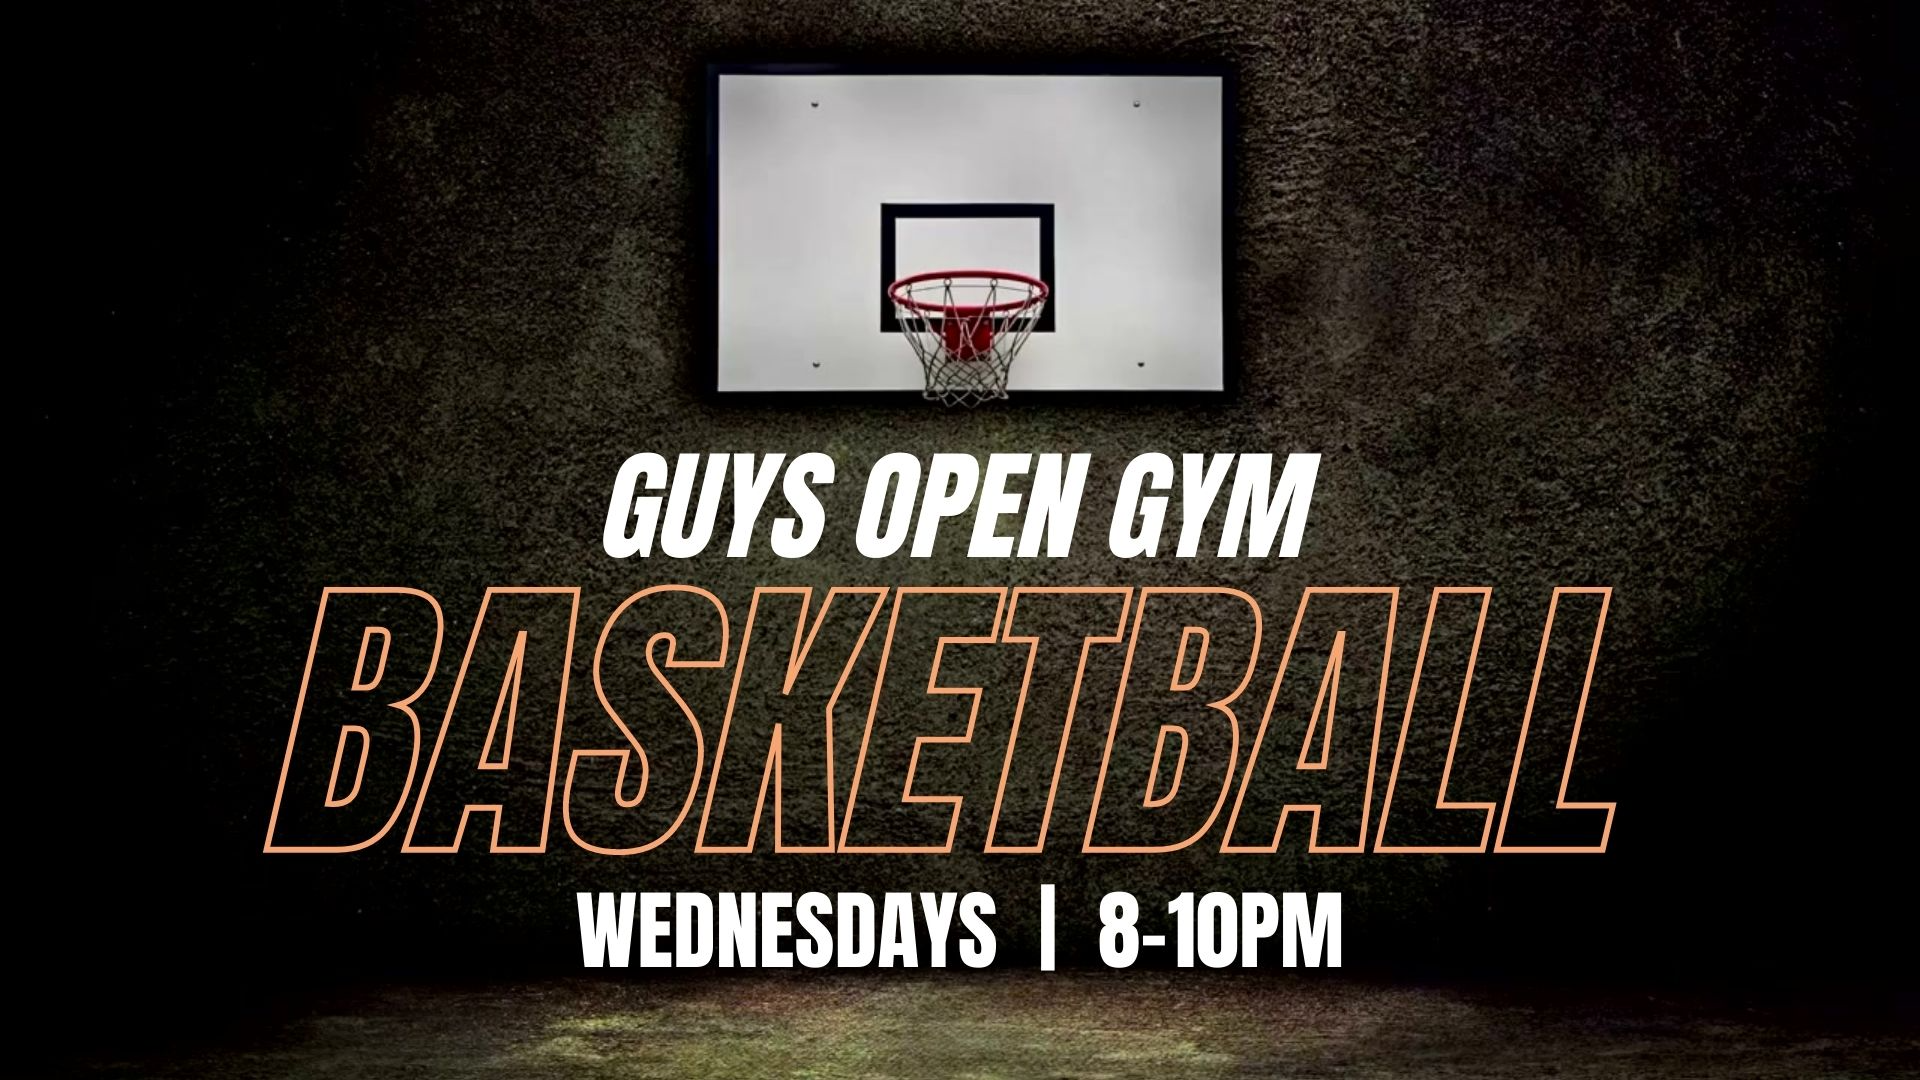 Guys Open Gym Basketball